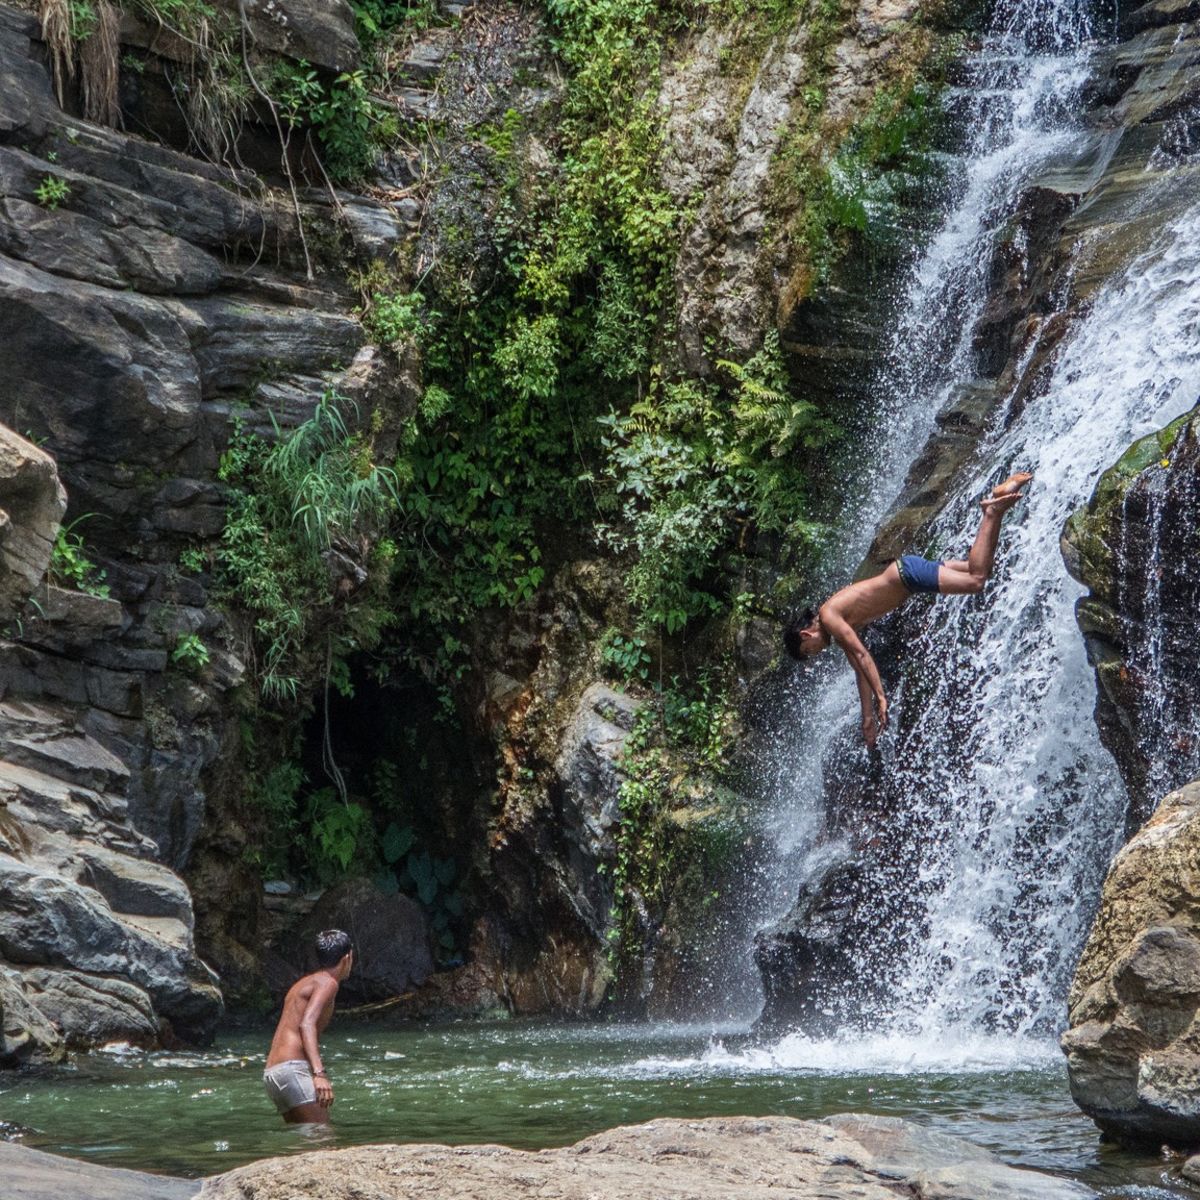 Boys jumping into waterfall in Sri Lanka